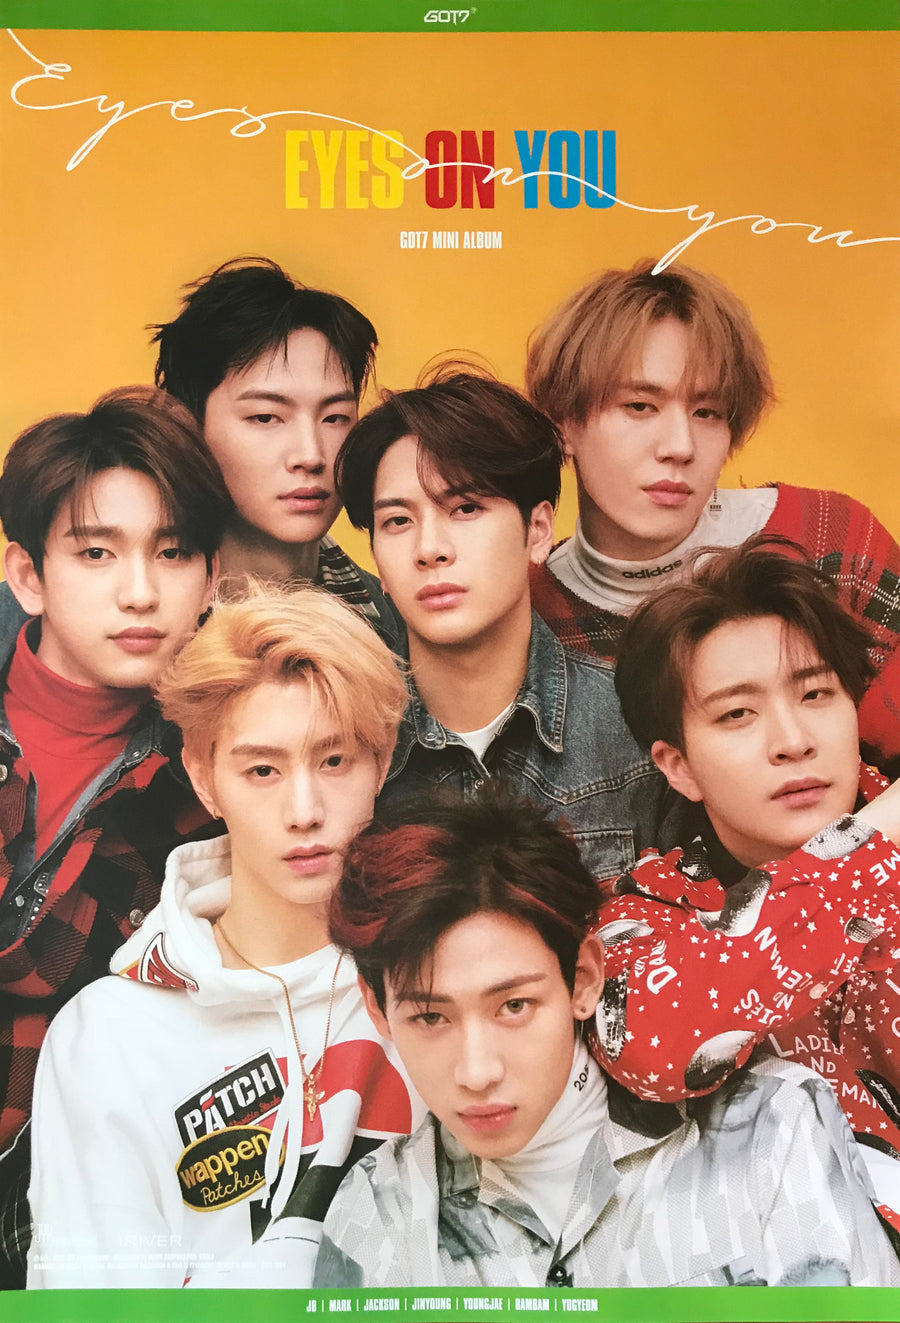 GOT7 Mini Album EYES ON YOU Official Poster - Photo Concept 1